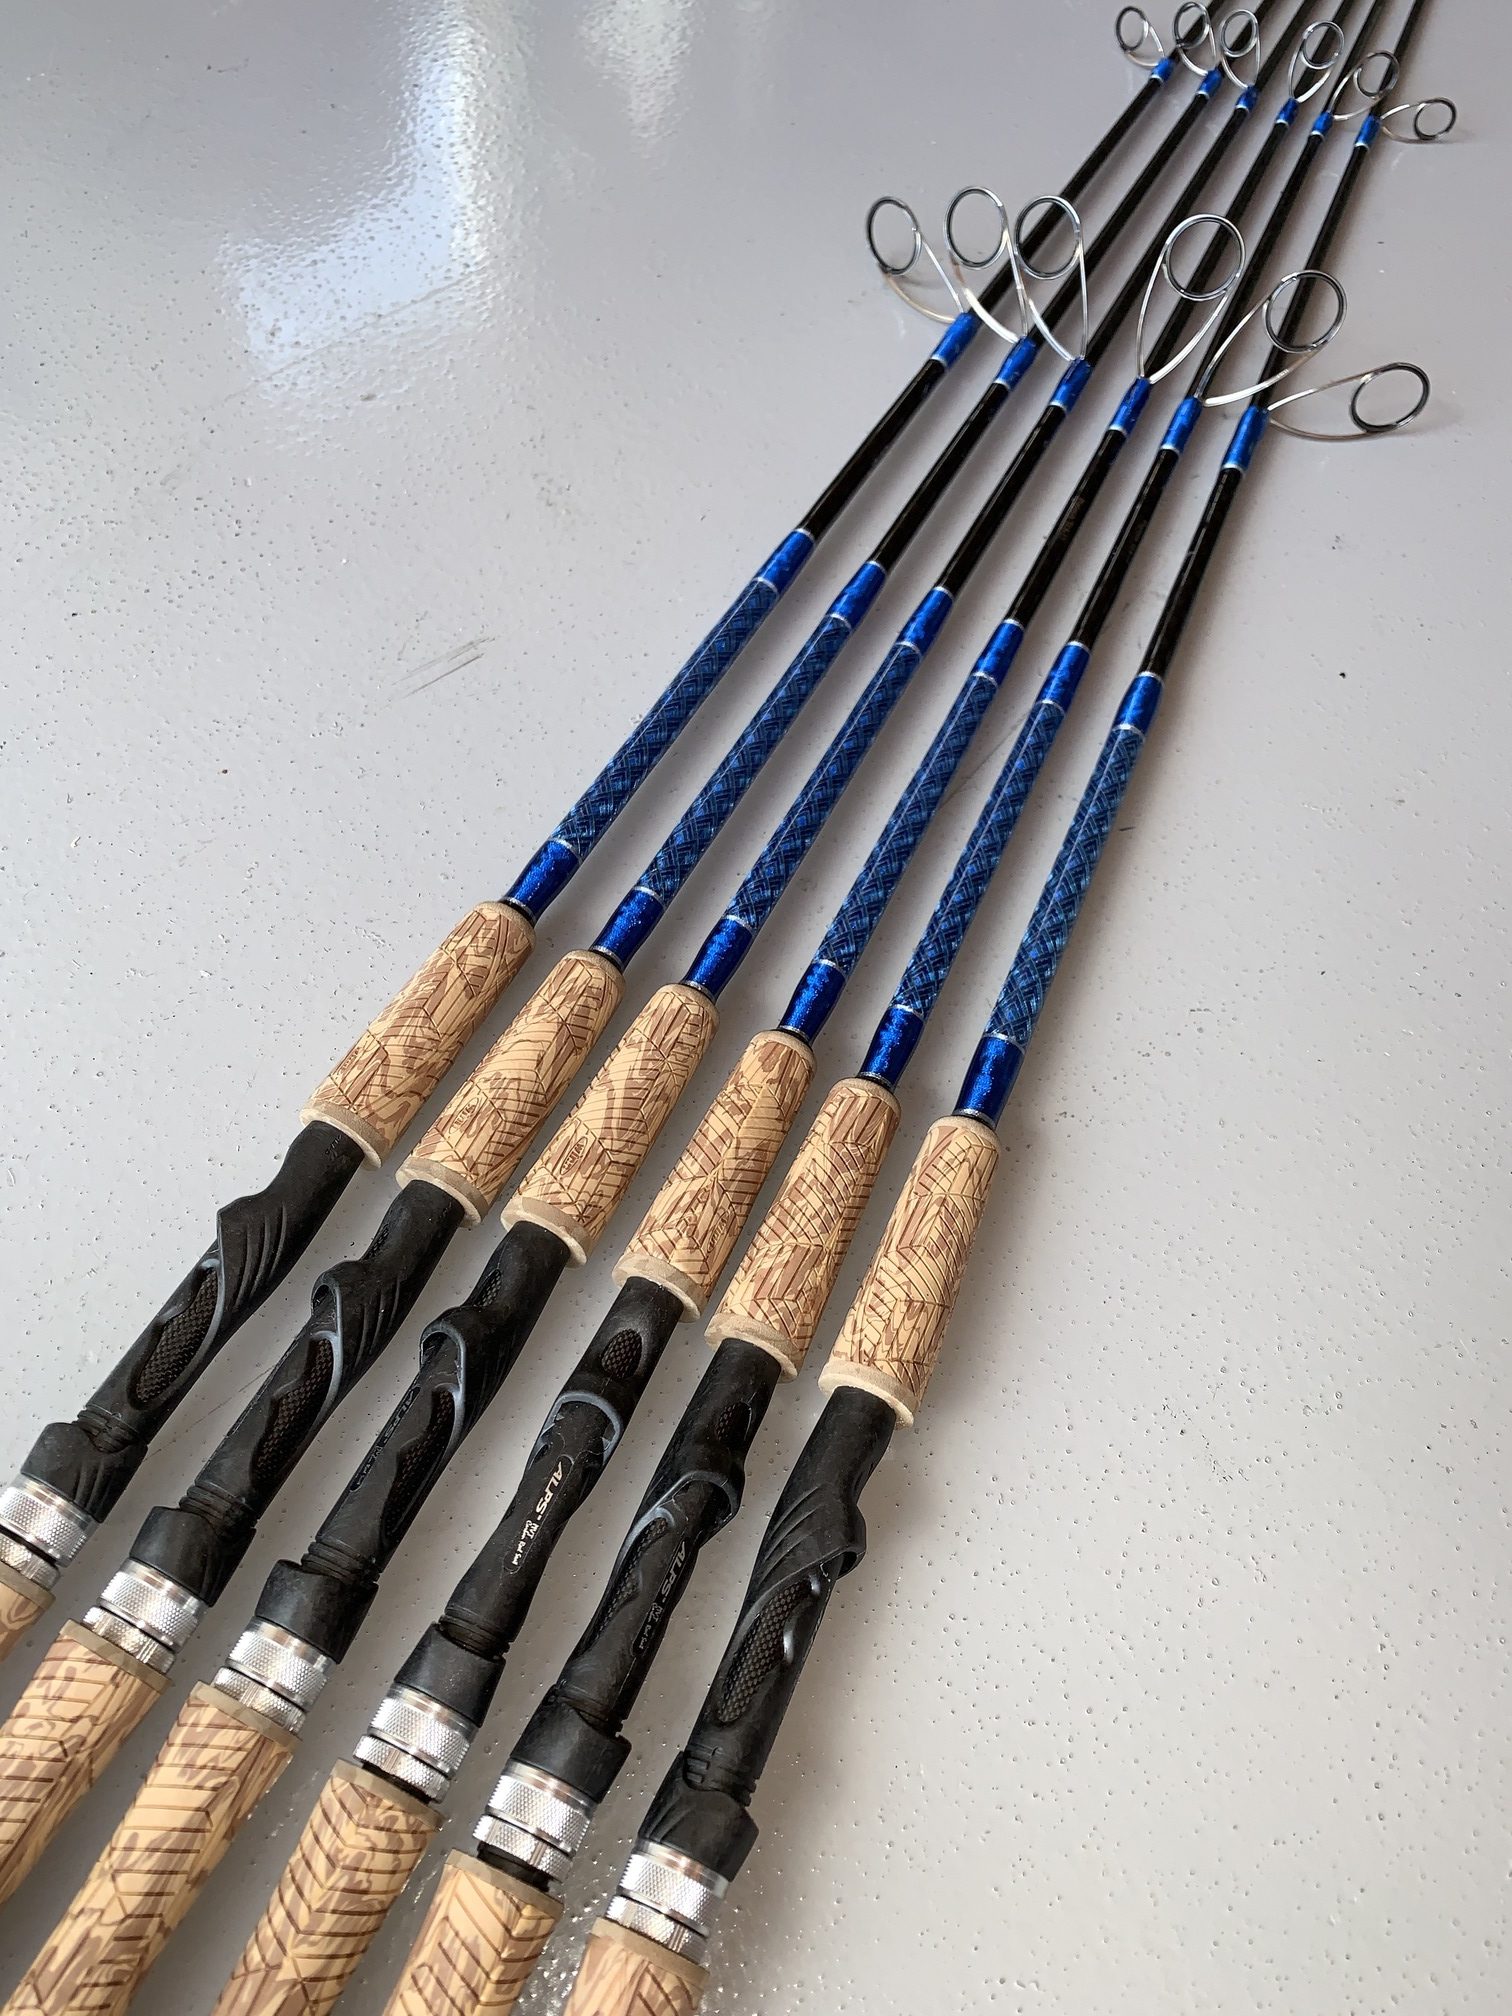 CAROOTU Titanium Alloy Carbon Fiber Boat Fishing Rod Far Casting Fishing  Pole for Freshwater Sea 